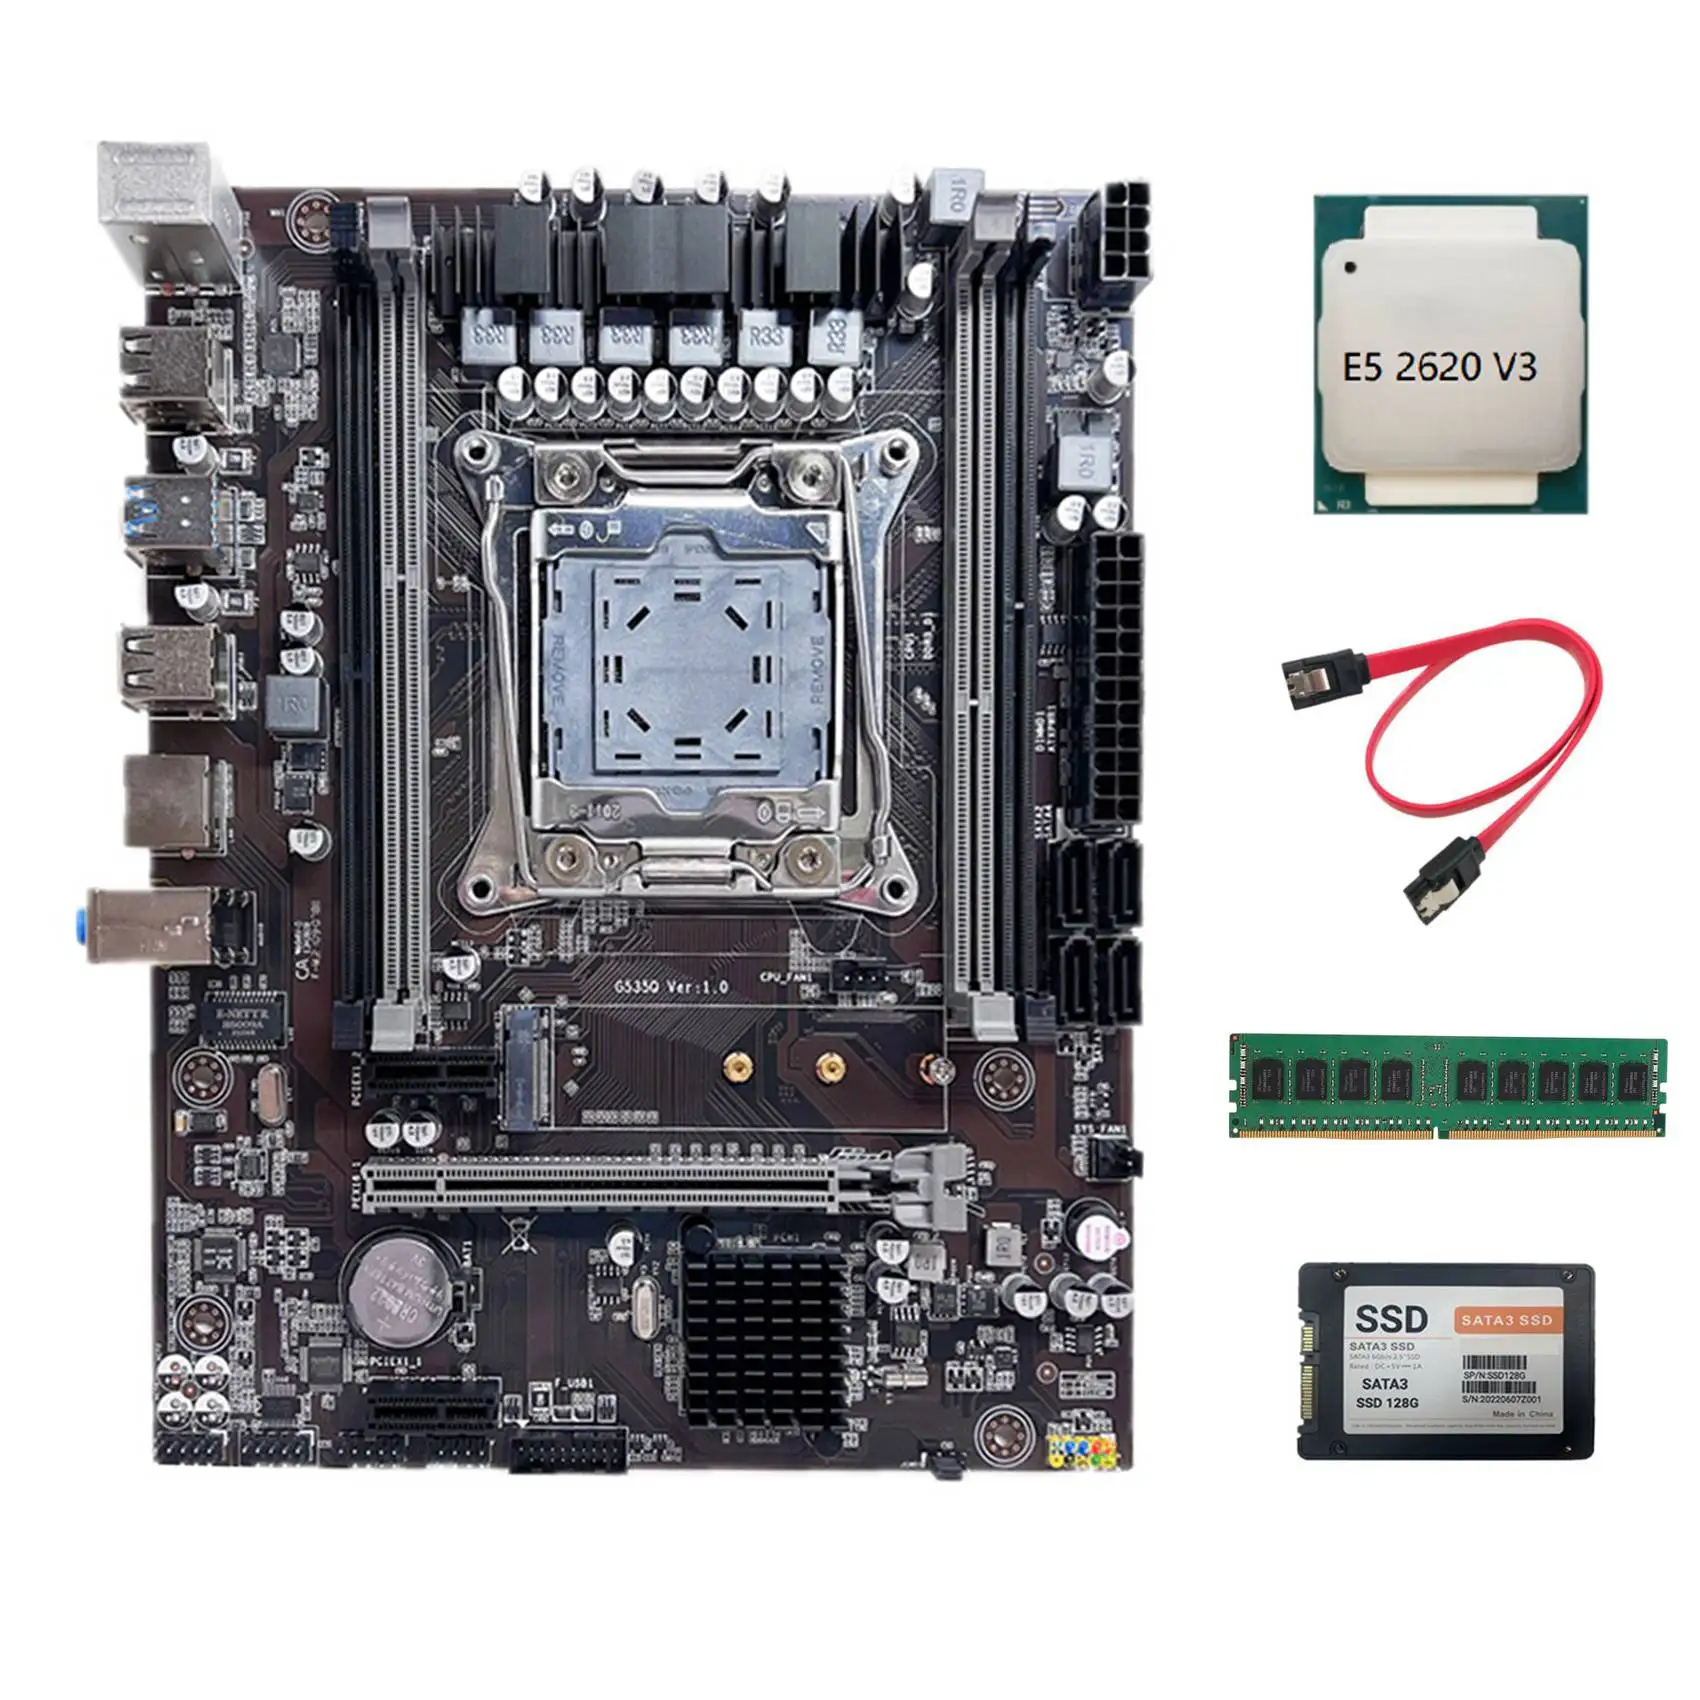 

X99 Motherboard LGA2011-3 Computer Motherboard with E5 2620 V3 CPU+SATA3 SSD 128G+DDR4 4GB 2133Mhz RAM+SATA Cable